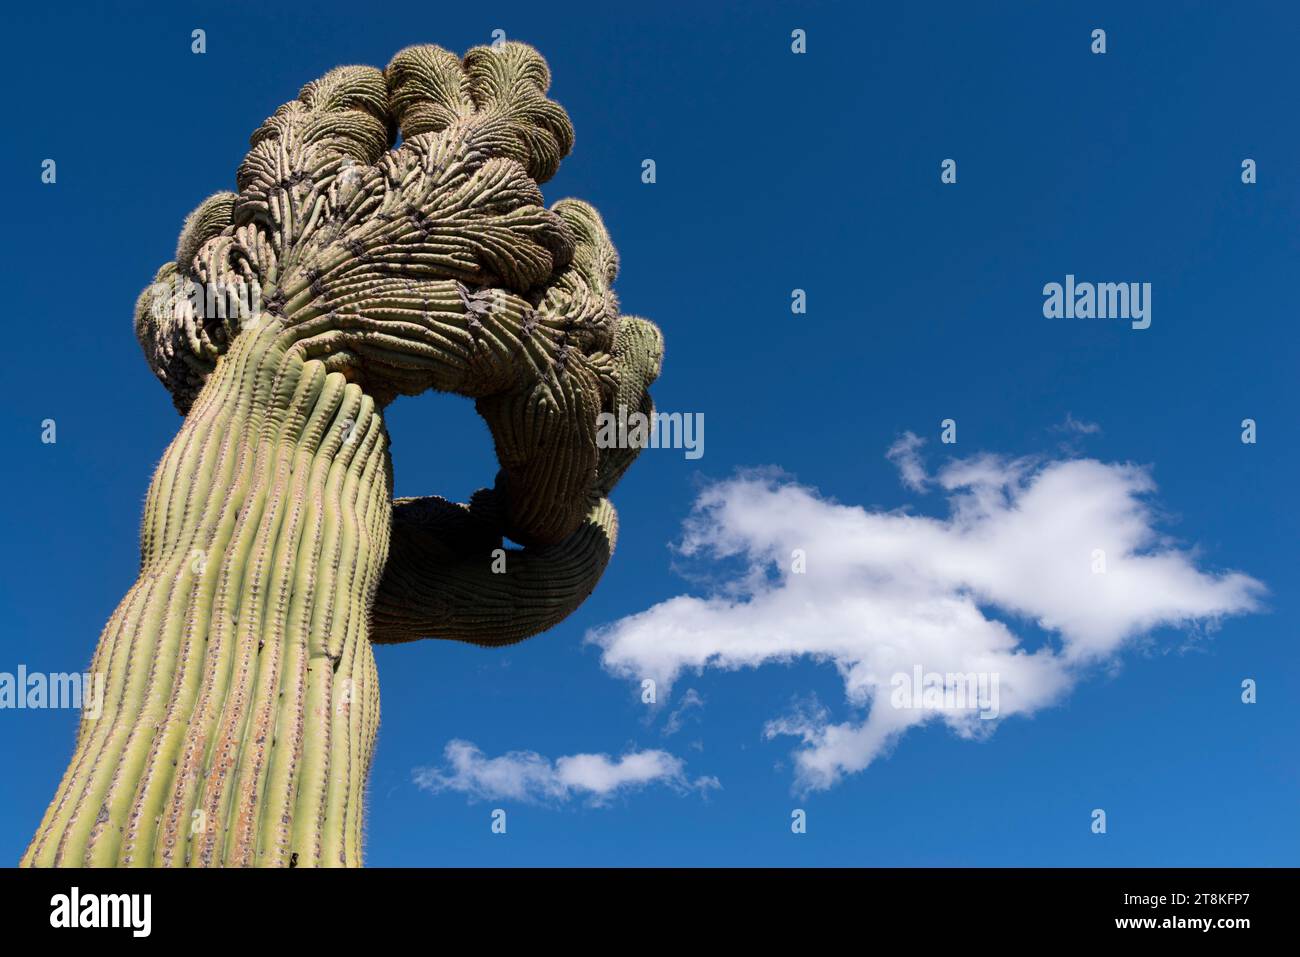 Crested saguaro, Arizona Stock Photo